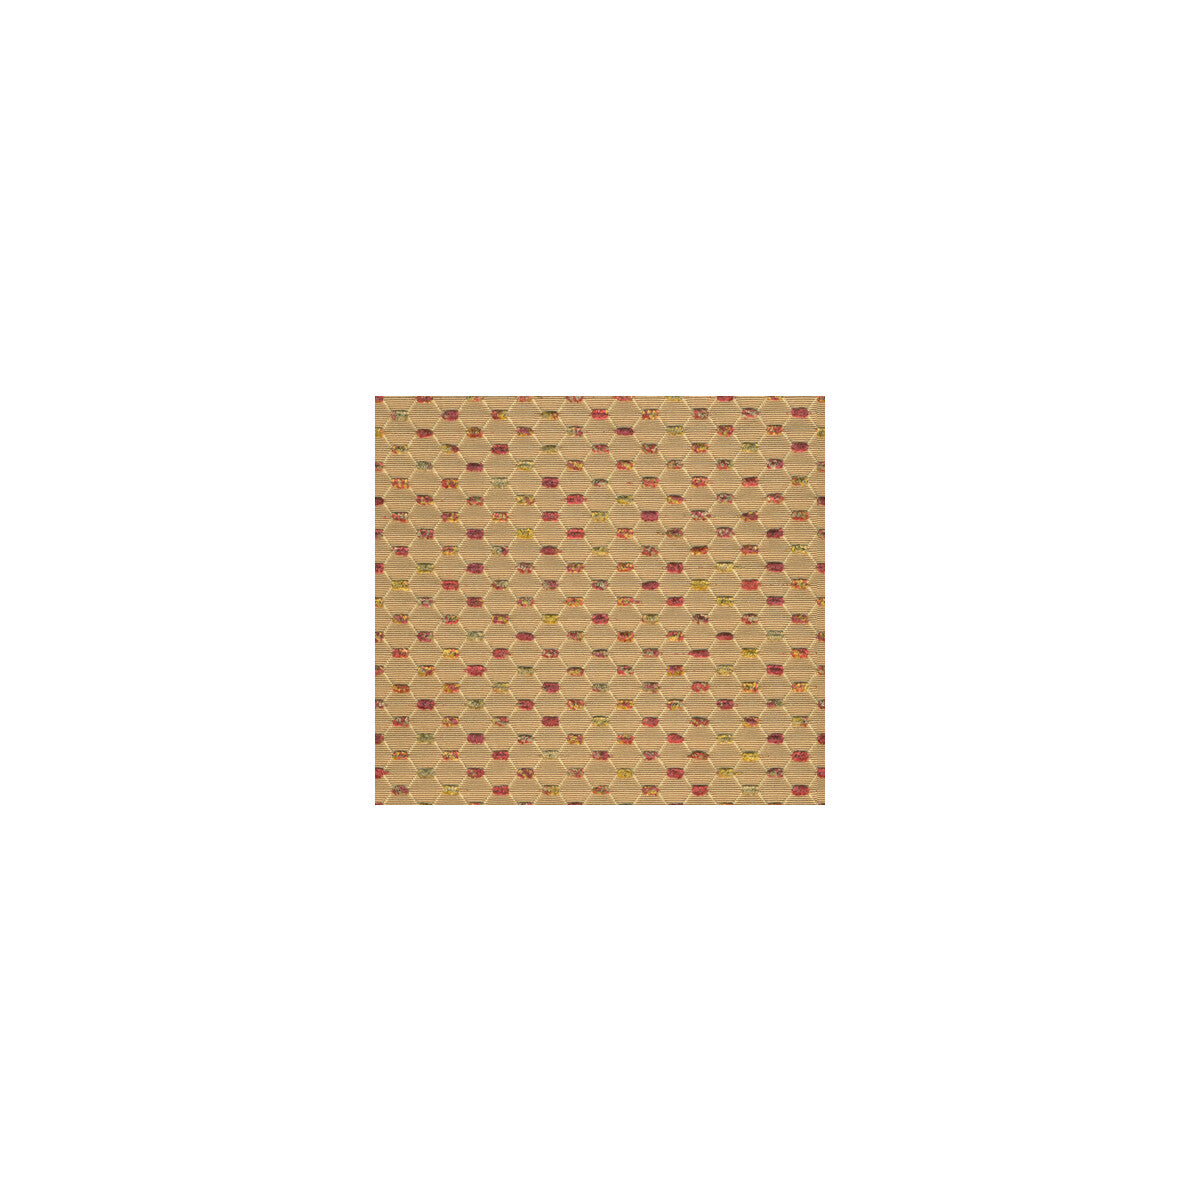 Kravet Smart fabric in 30631-419 color - pattern 30631.419.0 - by Kravet Smart